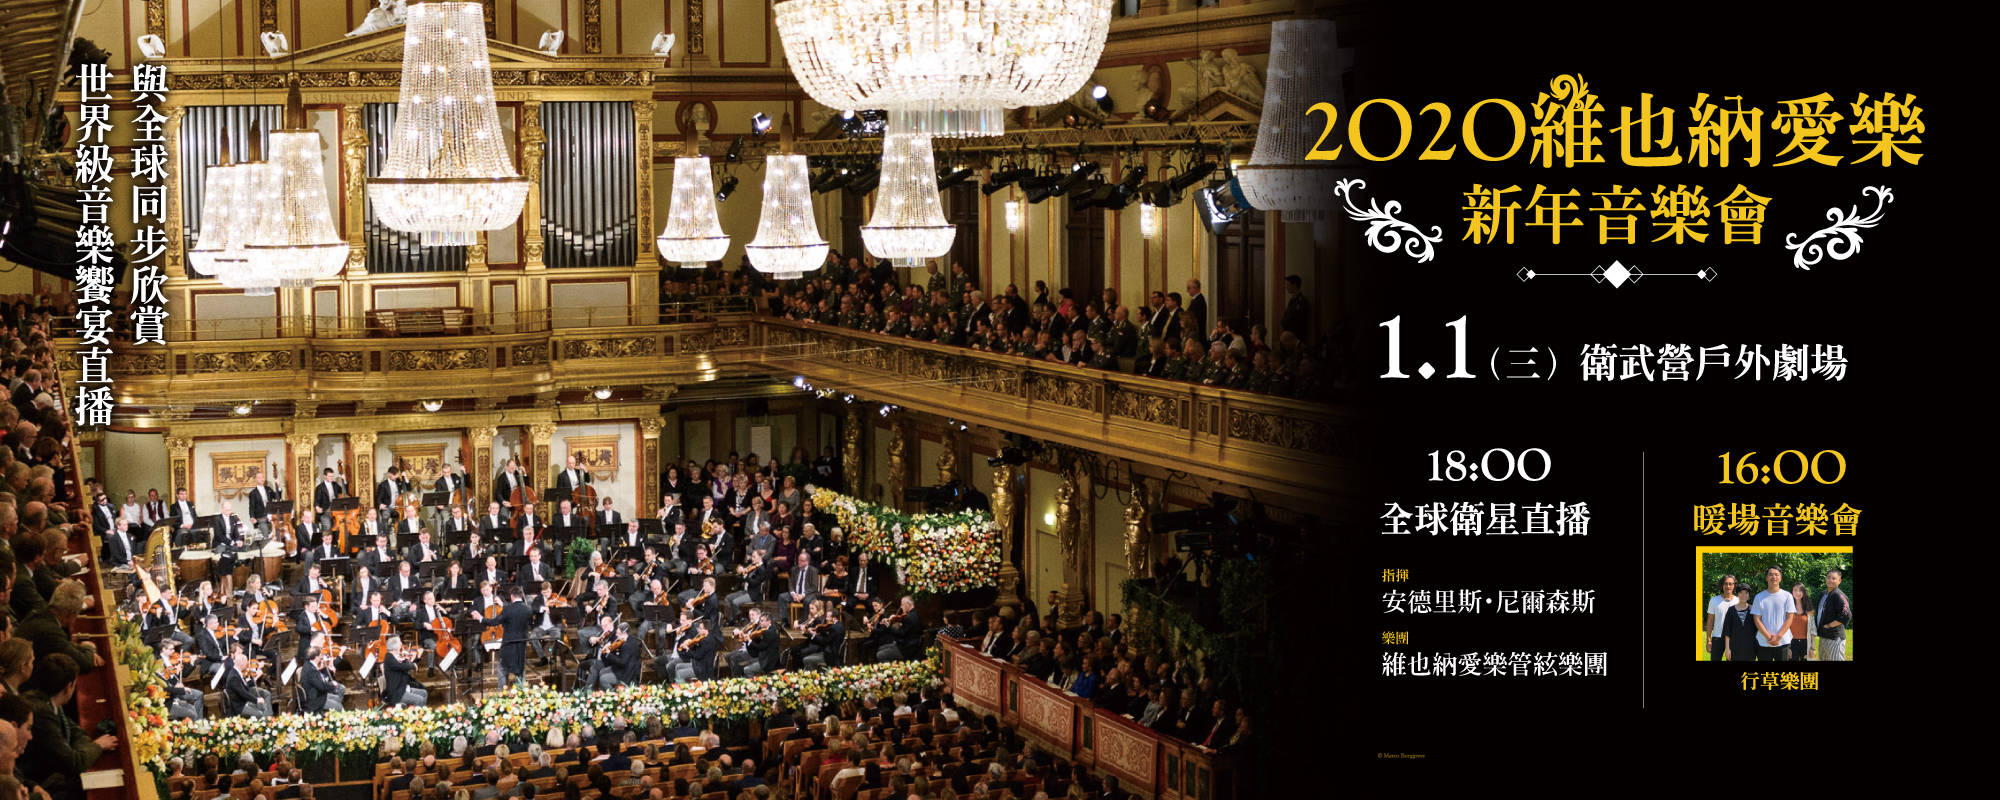 2020 Vienna Philharmonic New Year's Concert Live Broadcast